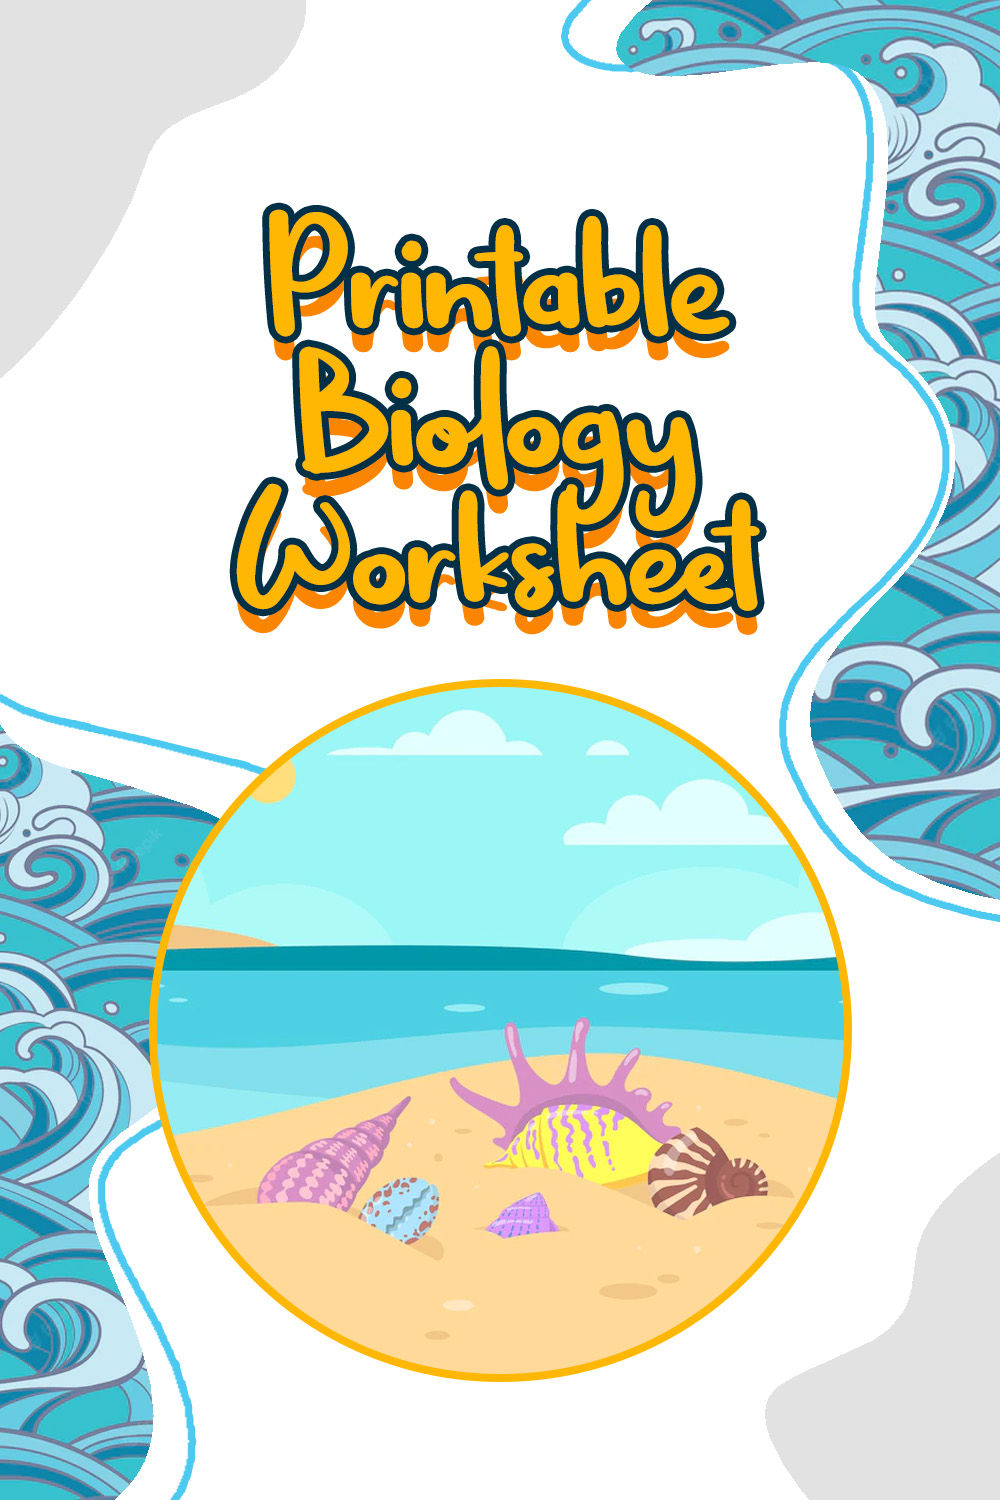 19 Images of  Printable Biology Worksheets